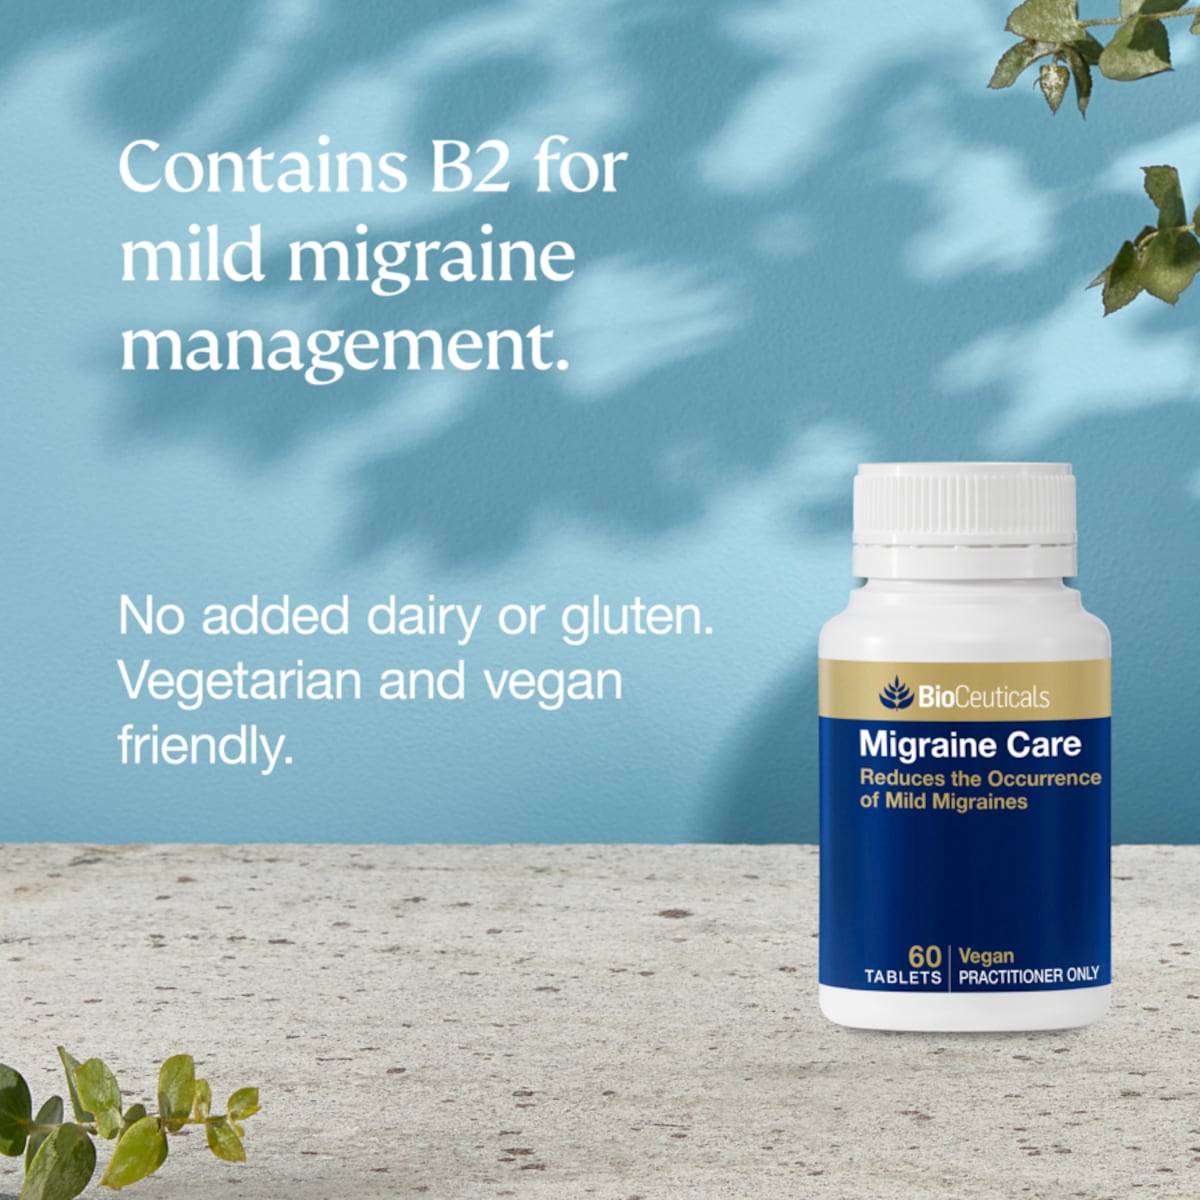 BioCeuticals Migraine Care 60 Tablets